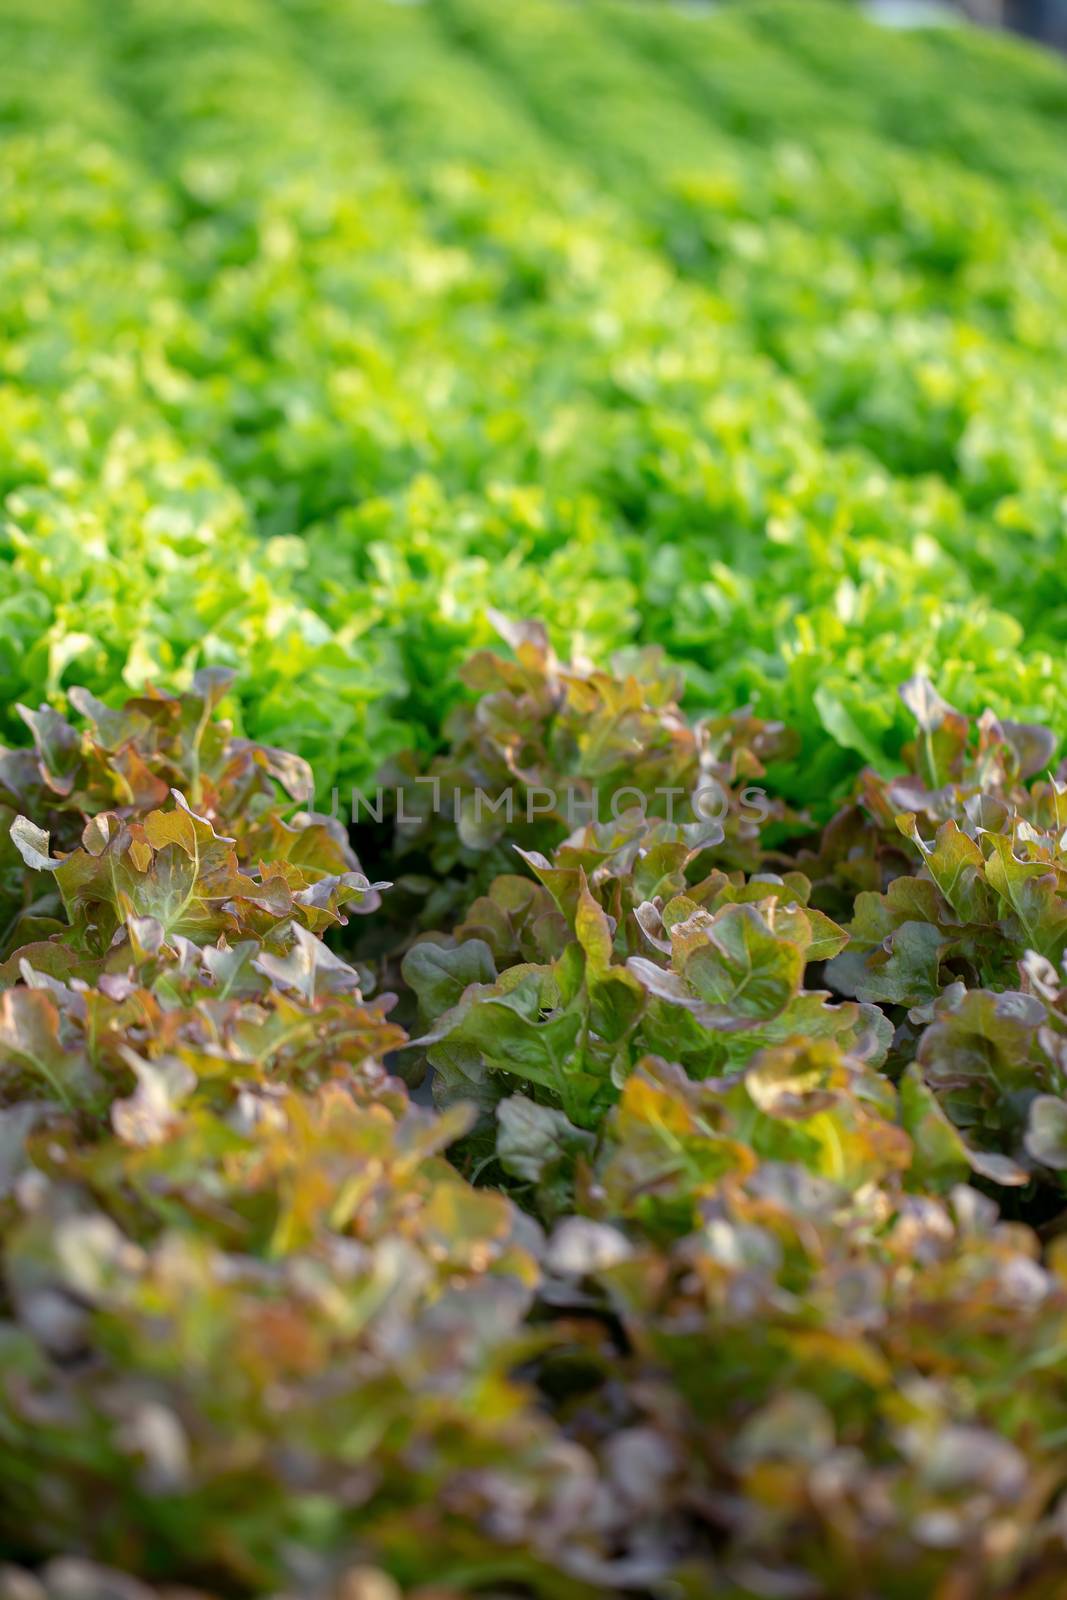 Fresh Green Oak lettuce leaves, Salads vegetable hydroponics far by kaiskynet